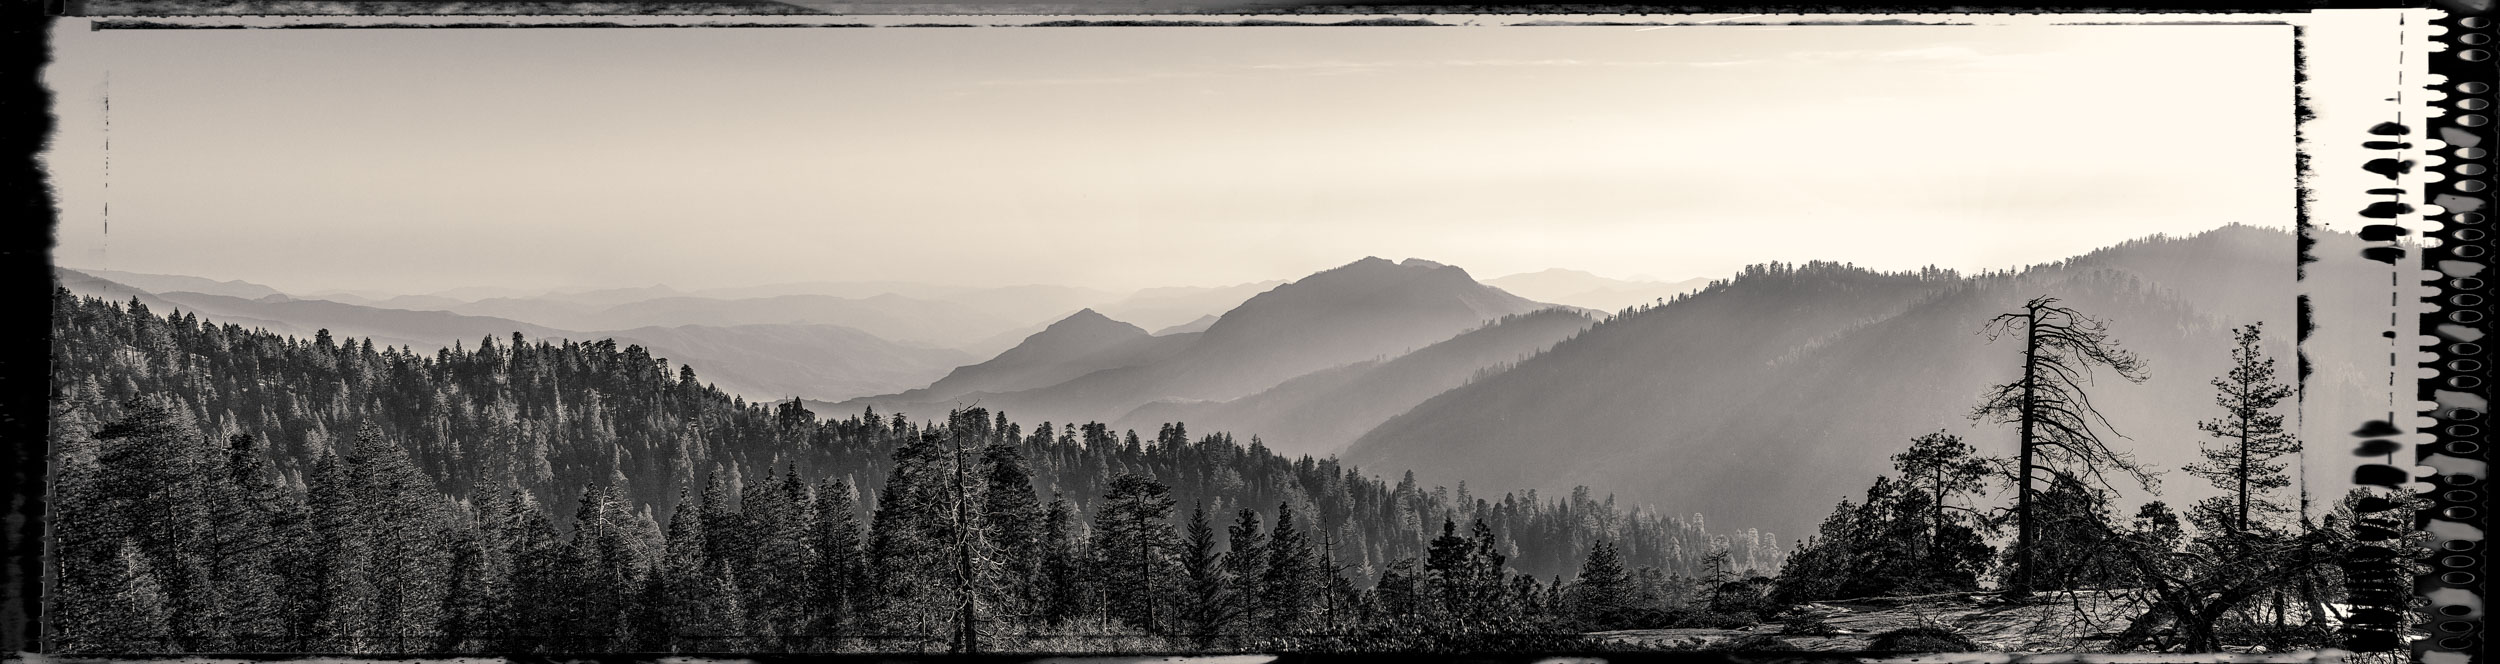 Sequoia Valley-1 (1).jpg